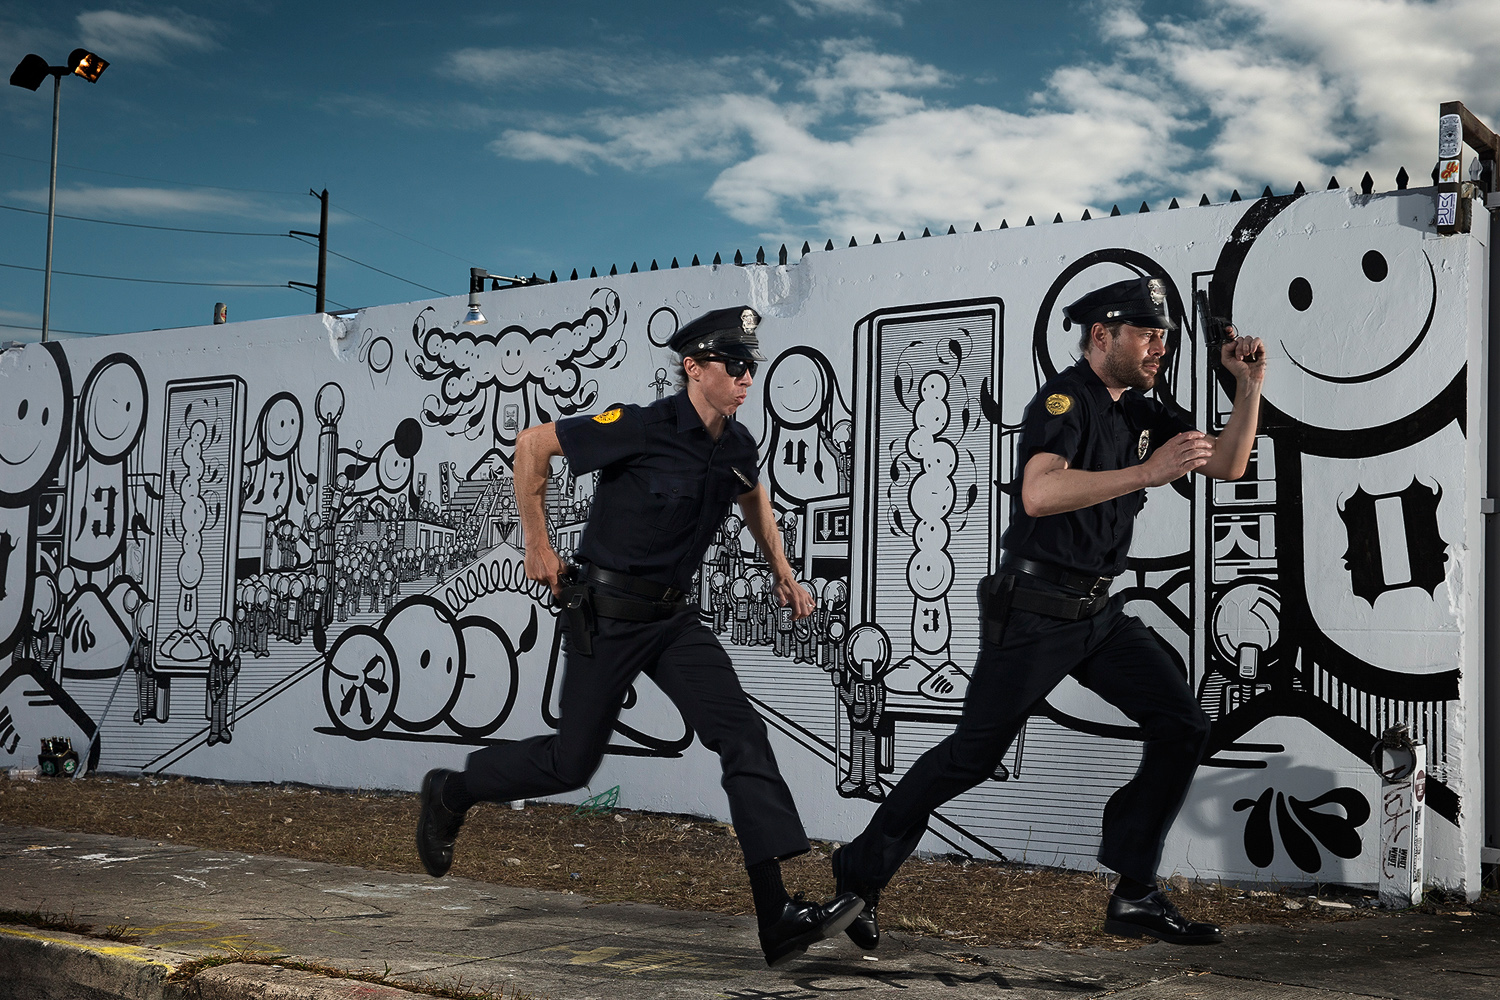 Søren Solkær, The London Police (England), Miami 2013, 2013. C-print, 24 x 36 inches. Courtesy of the artist